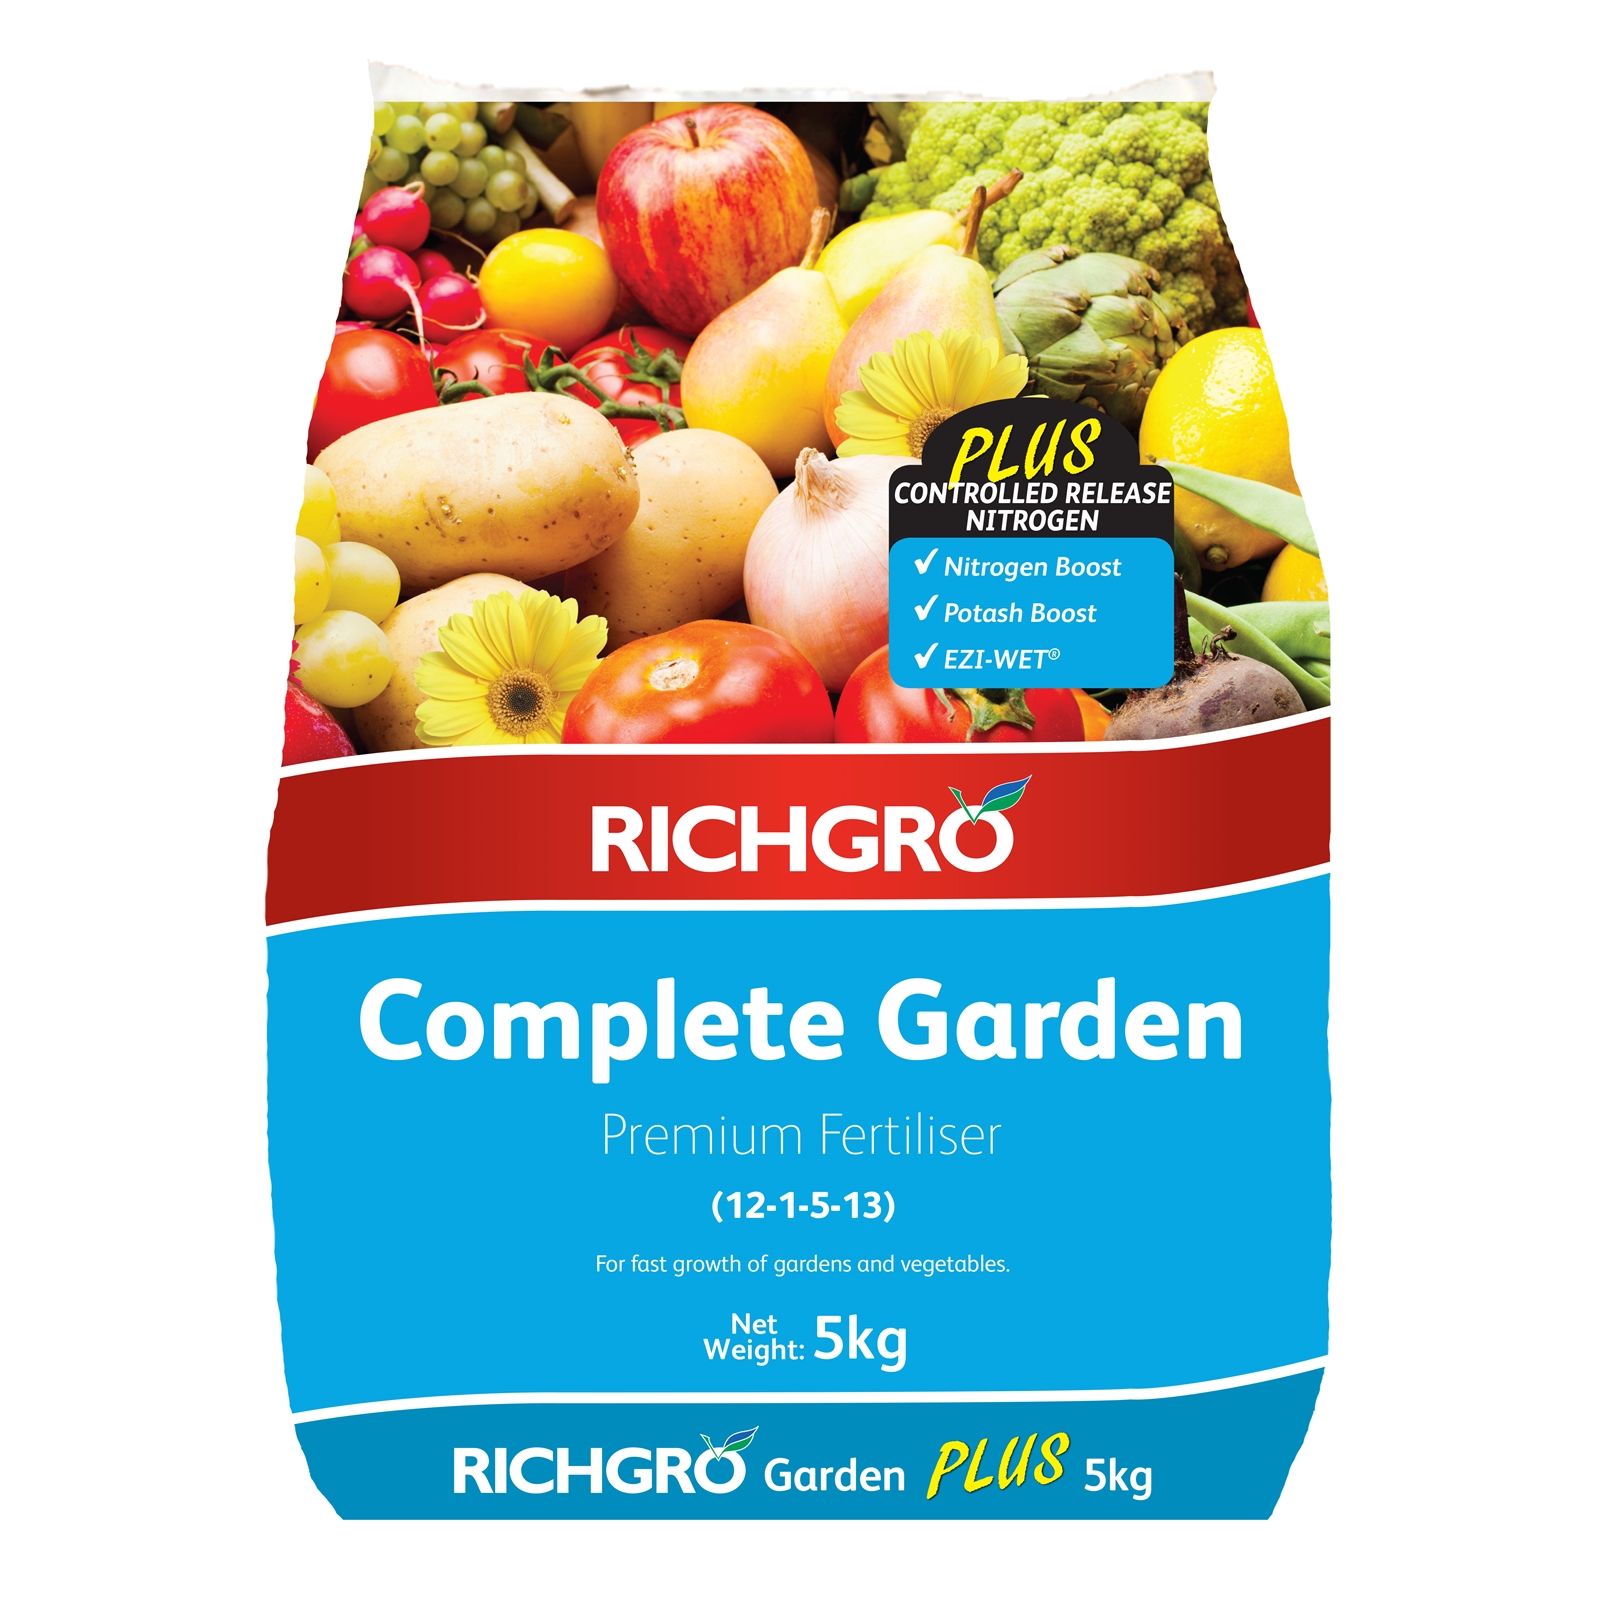 Richgro 5kg Garden Plus Complete Garden Premium Fertiliser